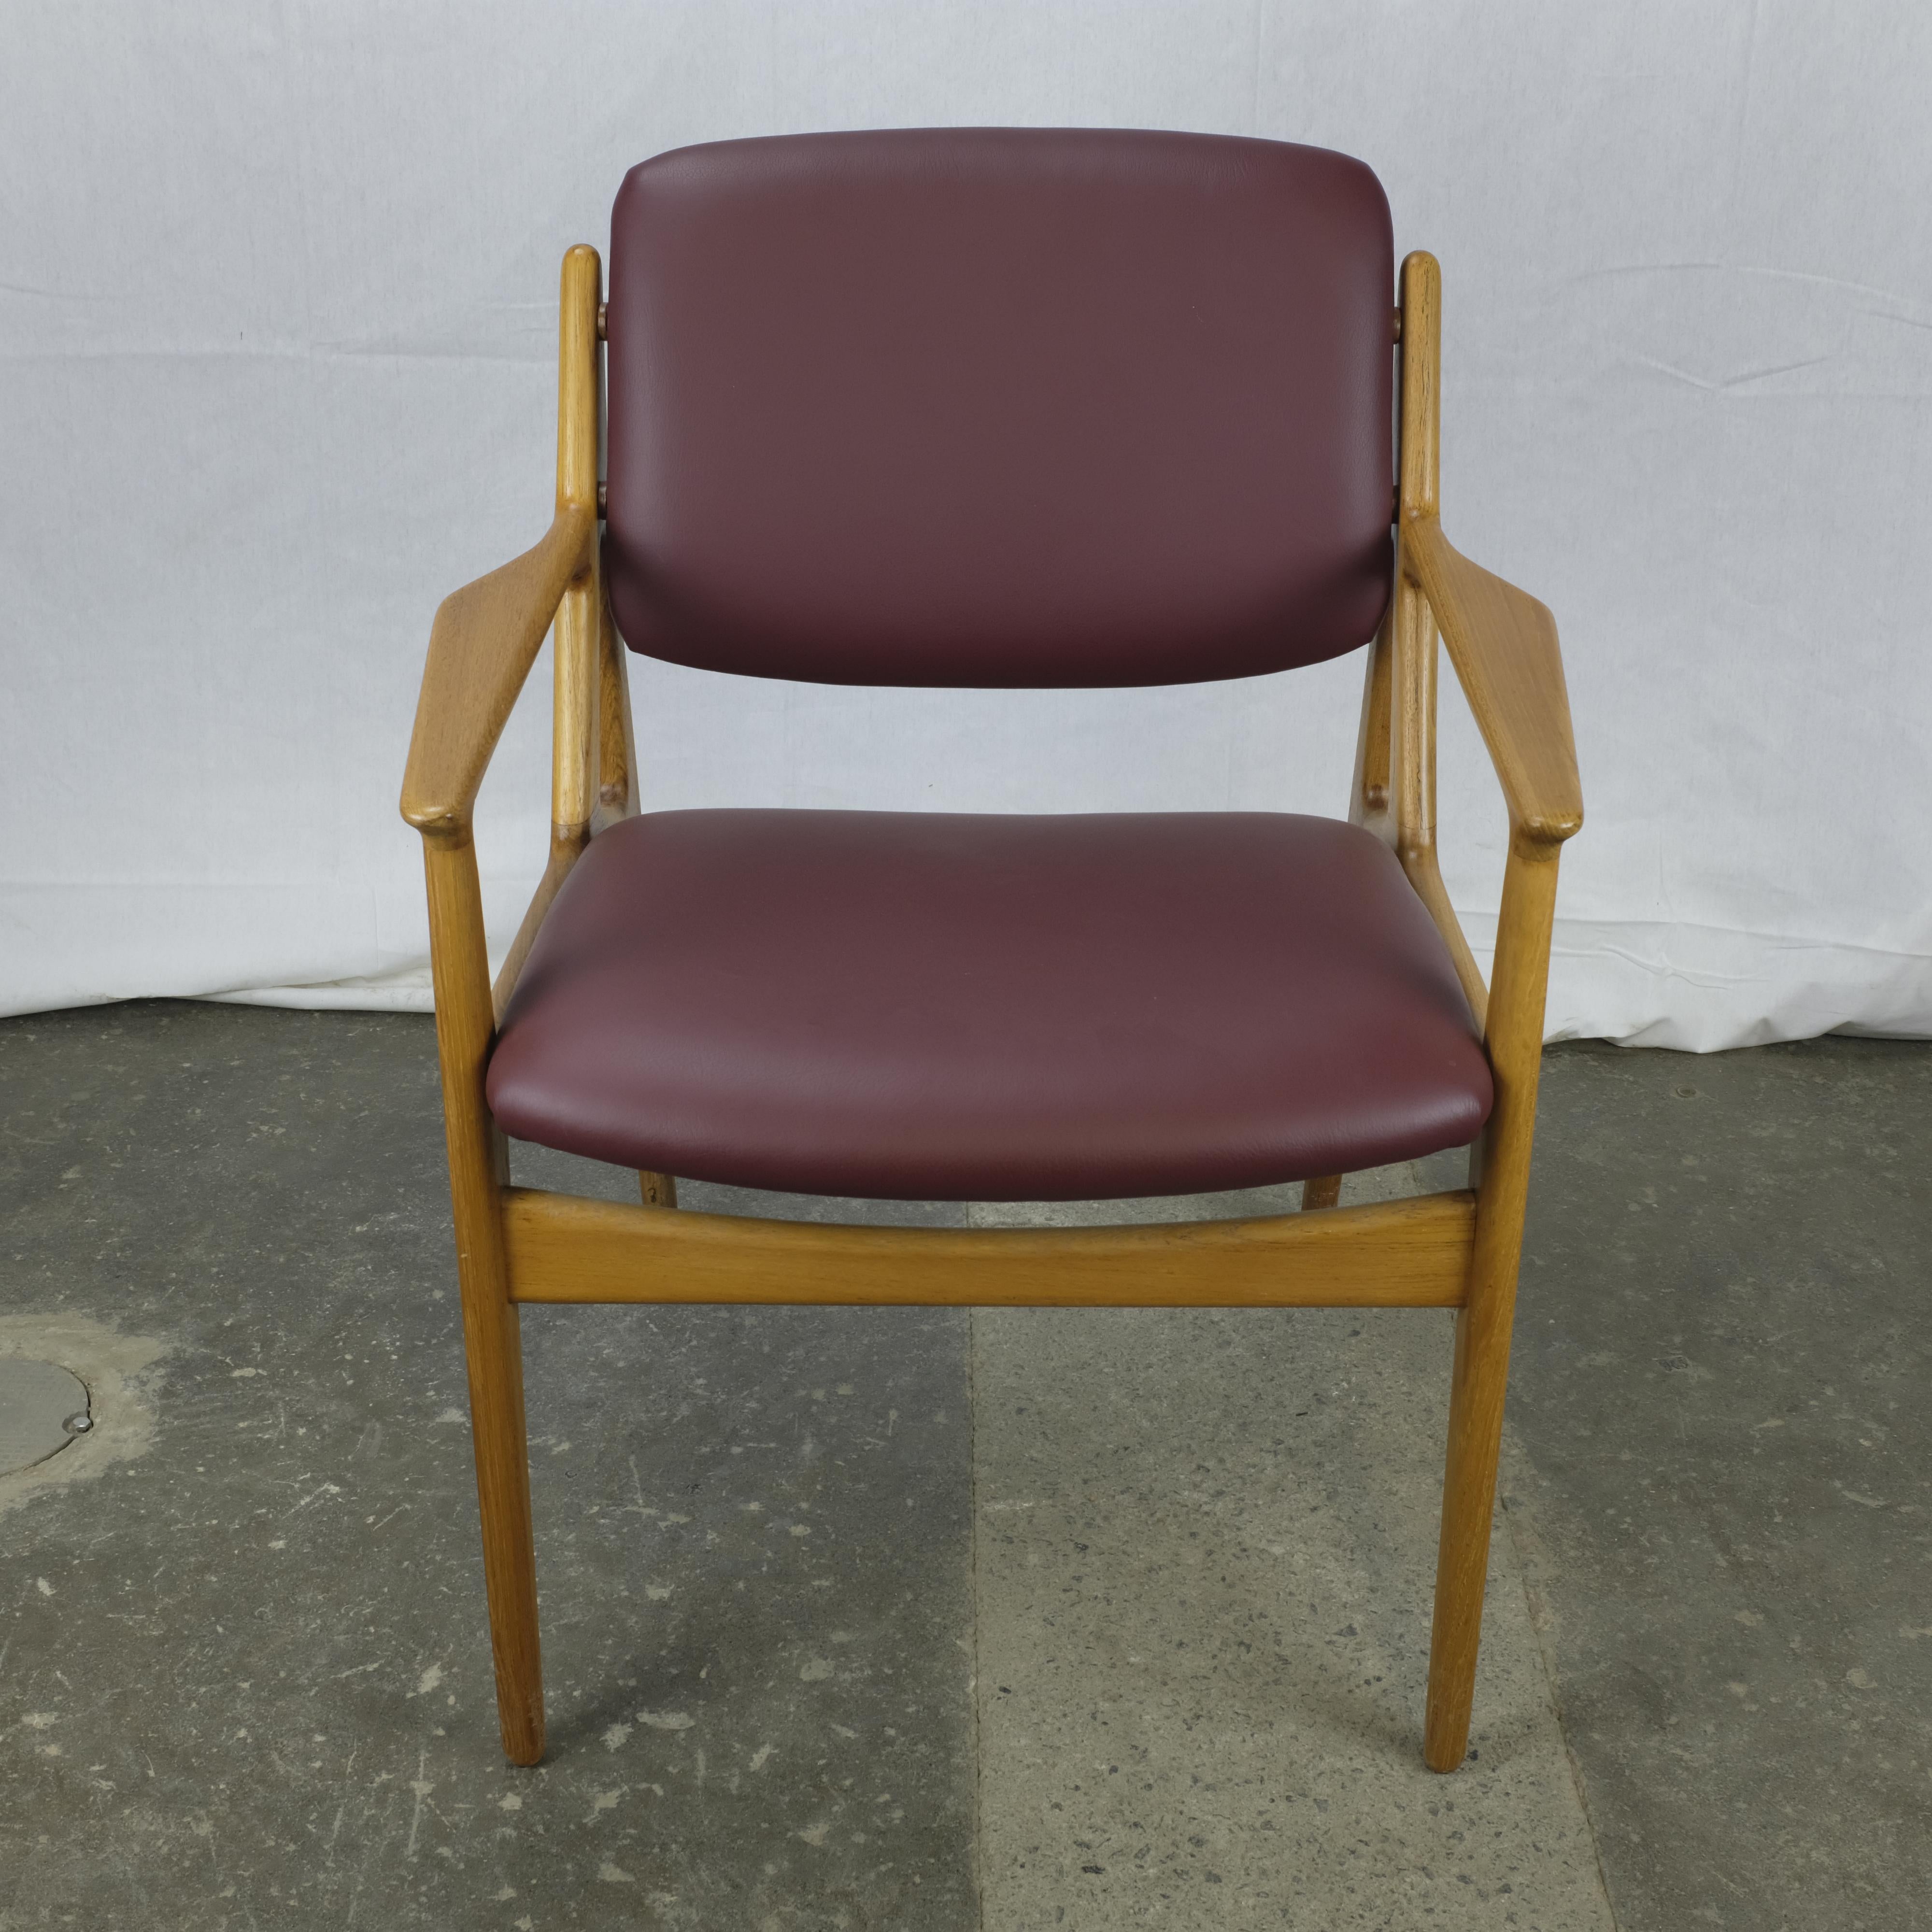 'Ellen' armchair with solid teak frame and upholstered seat and back, designed by Arne Vodder and manufactured in Denmark by Vamø Møbelfabrik.

The armrests have a slight downward tilt and are 23